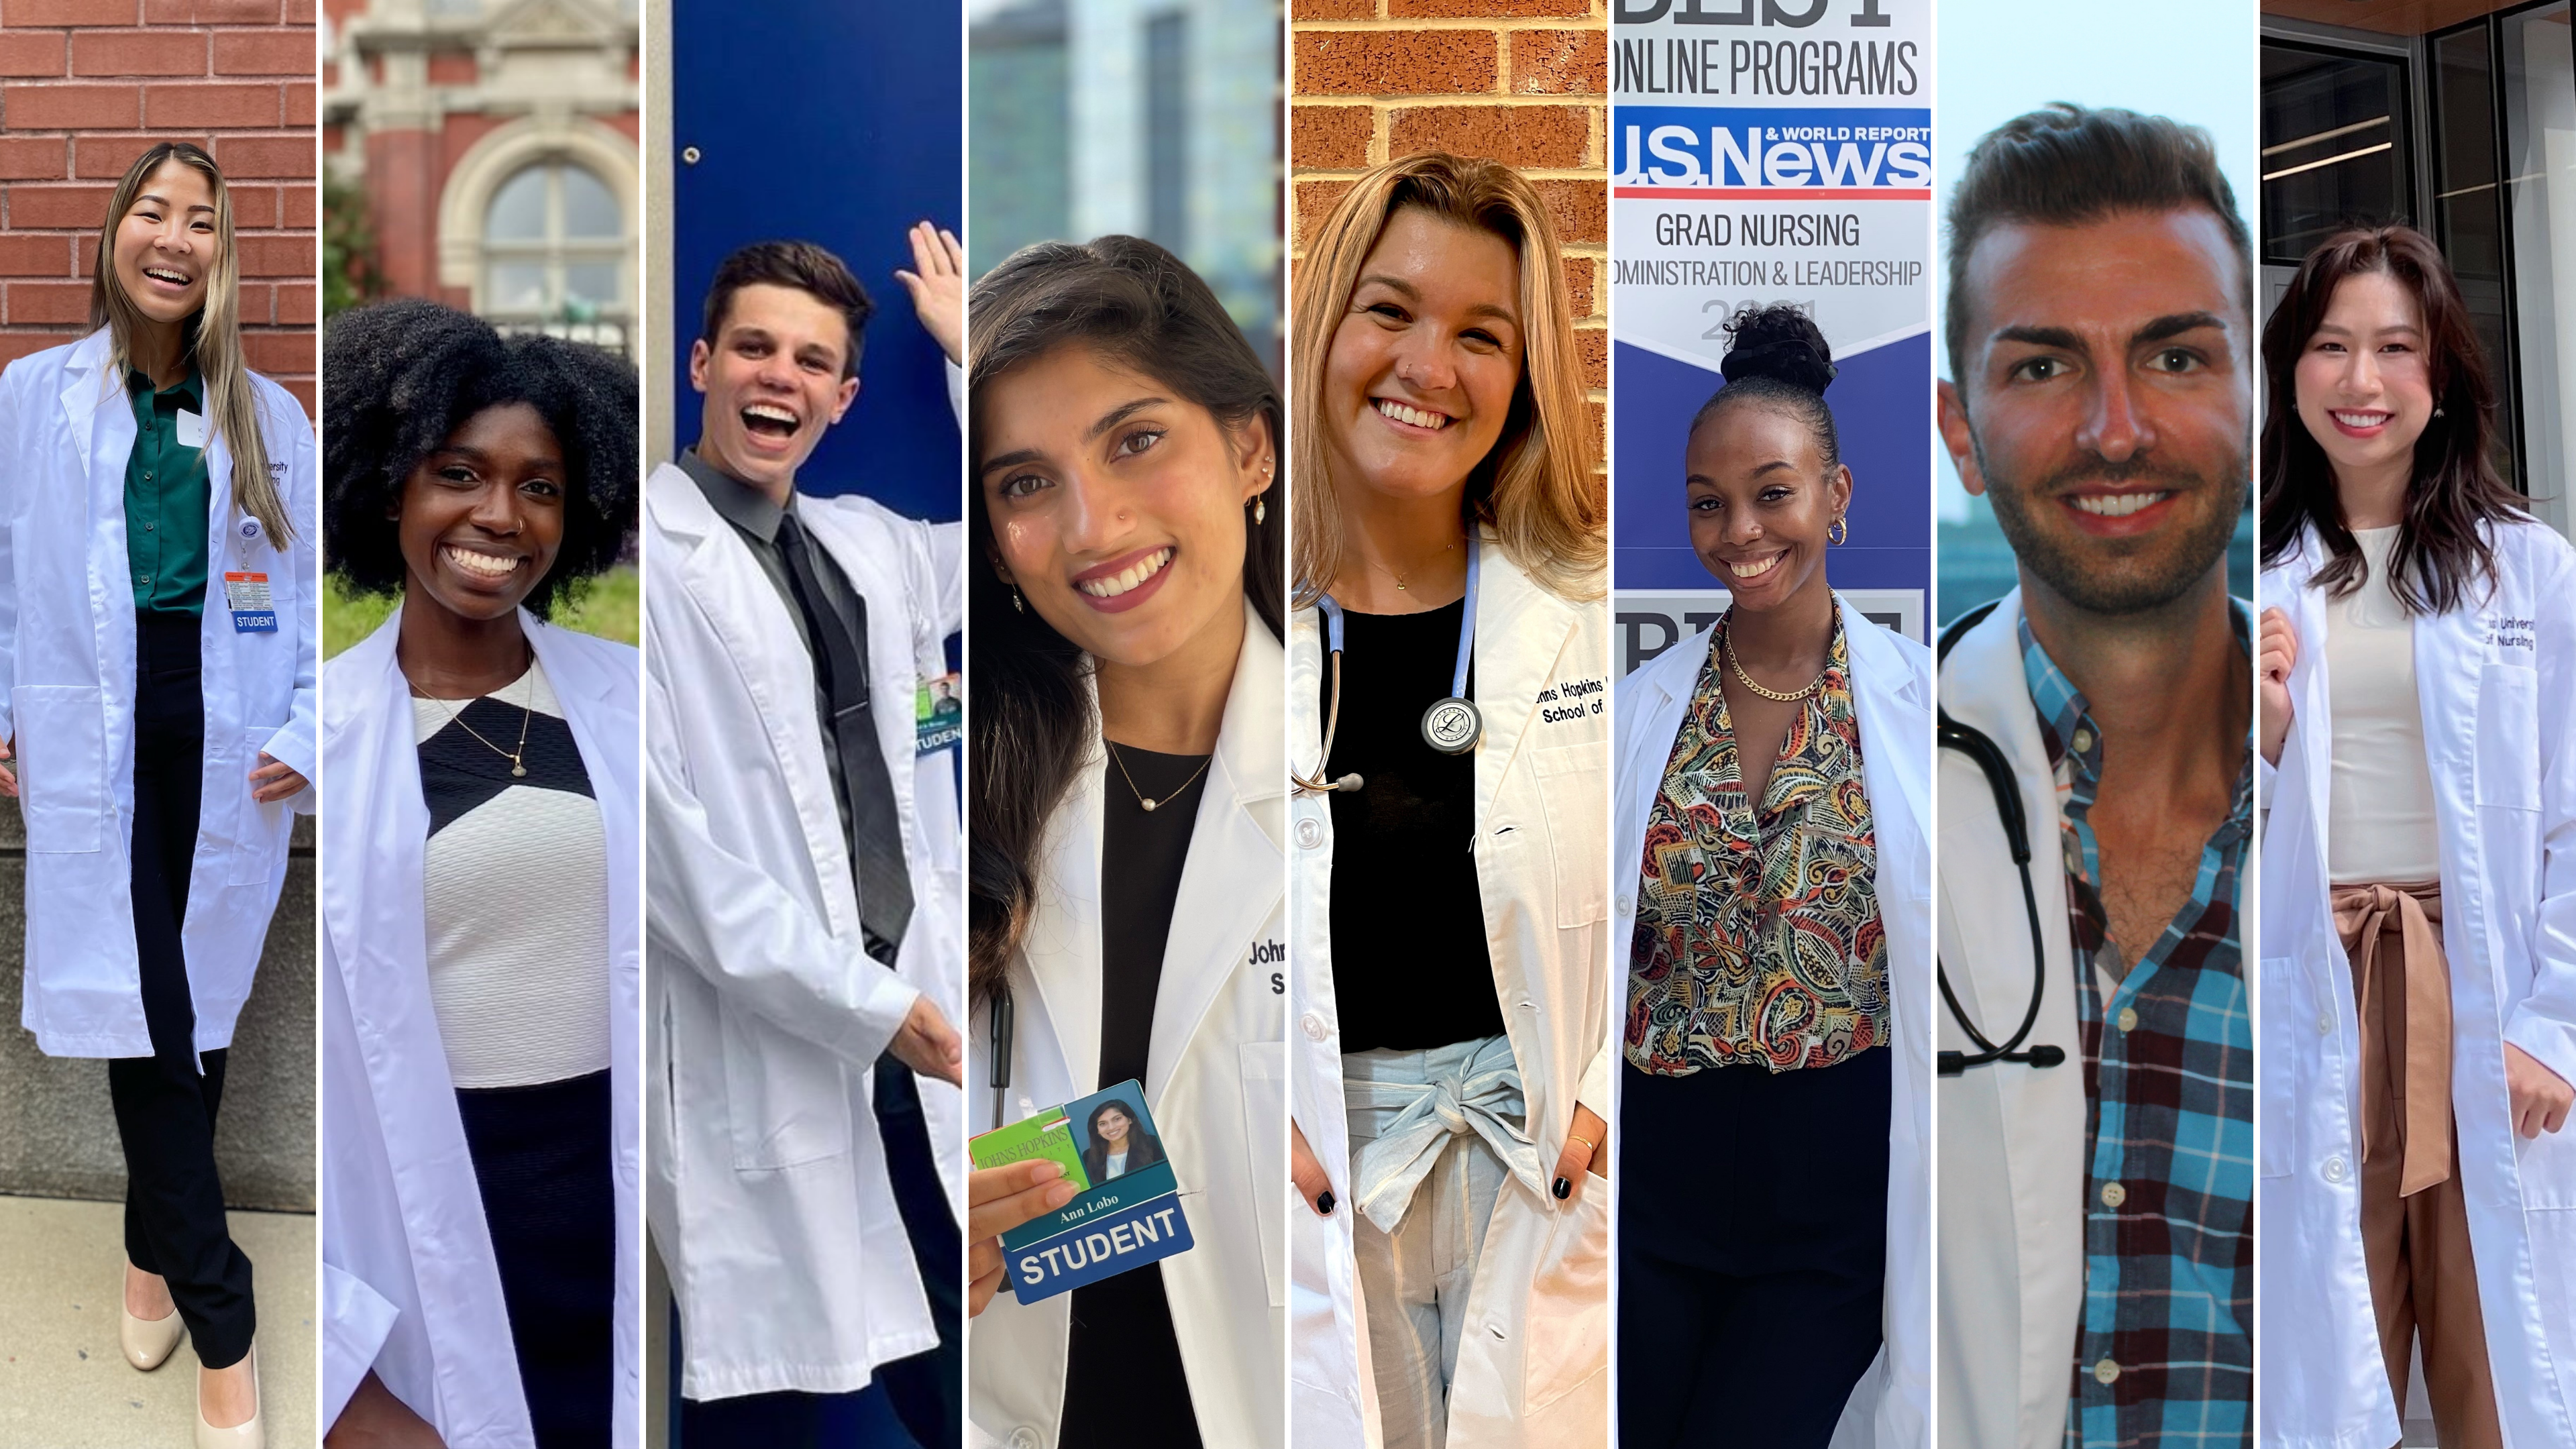 Soon-to-Be Nurses, Welcome to Johns Hopkins